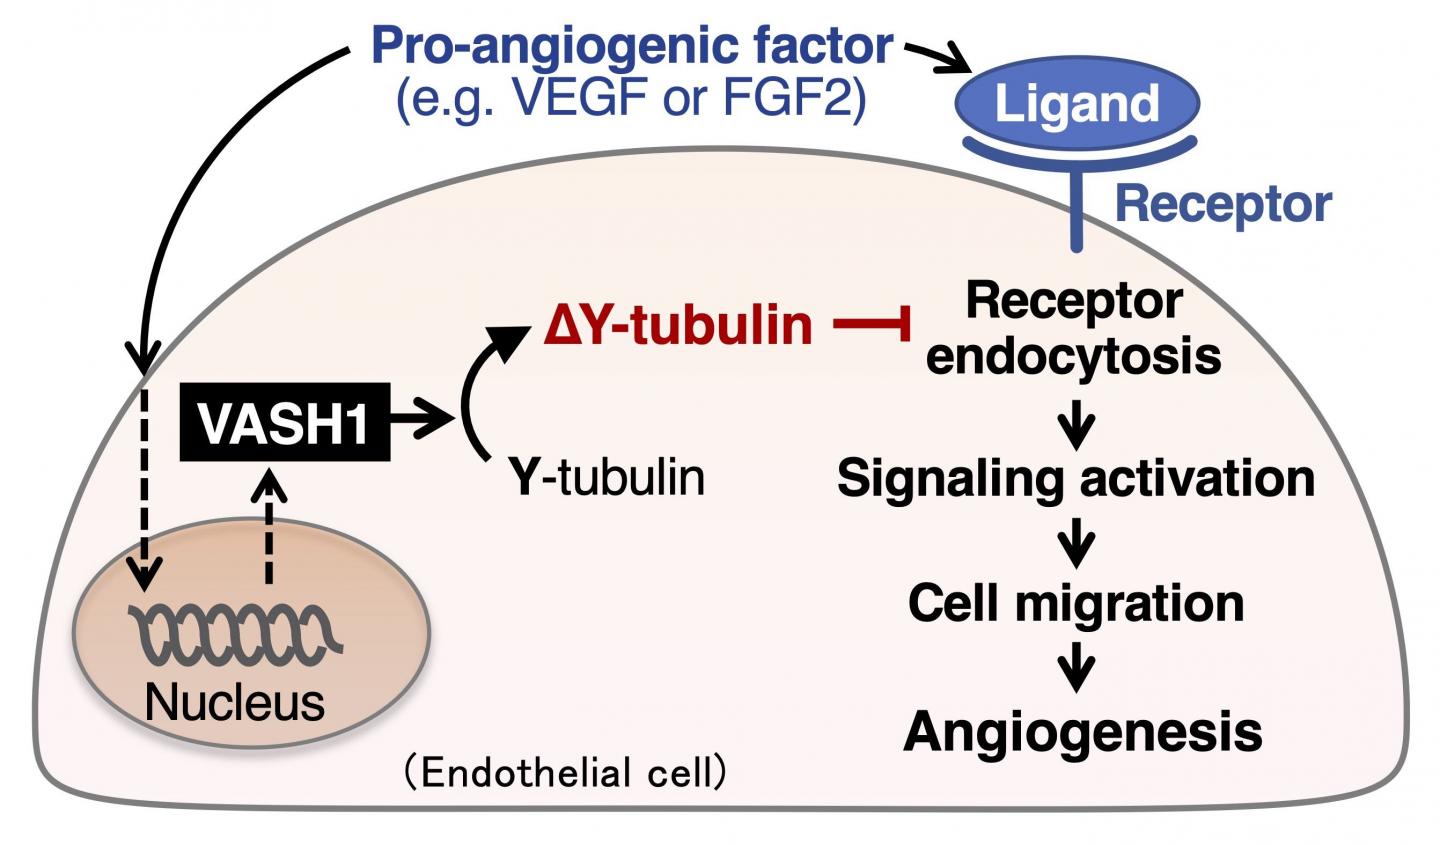 Schematic Diagram of the Angiogenic Signaling Modulating Mechanism through VASH1/ΔY-tubulin.